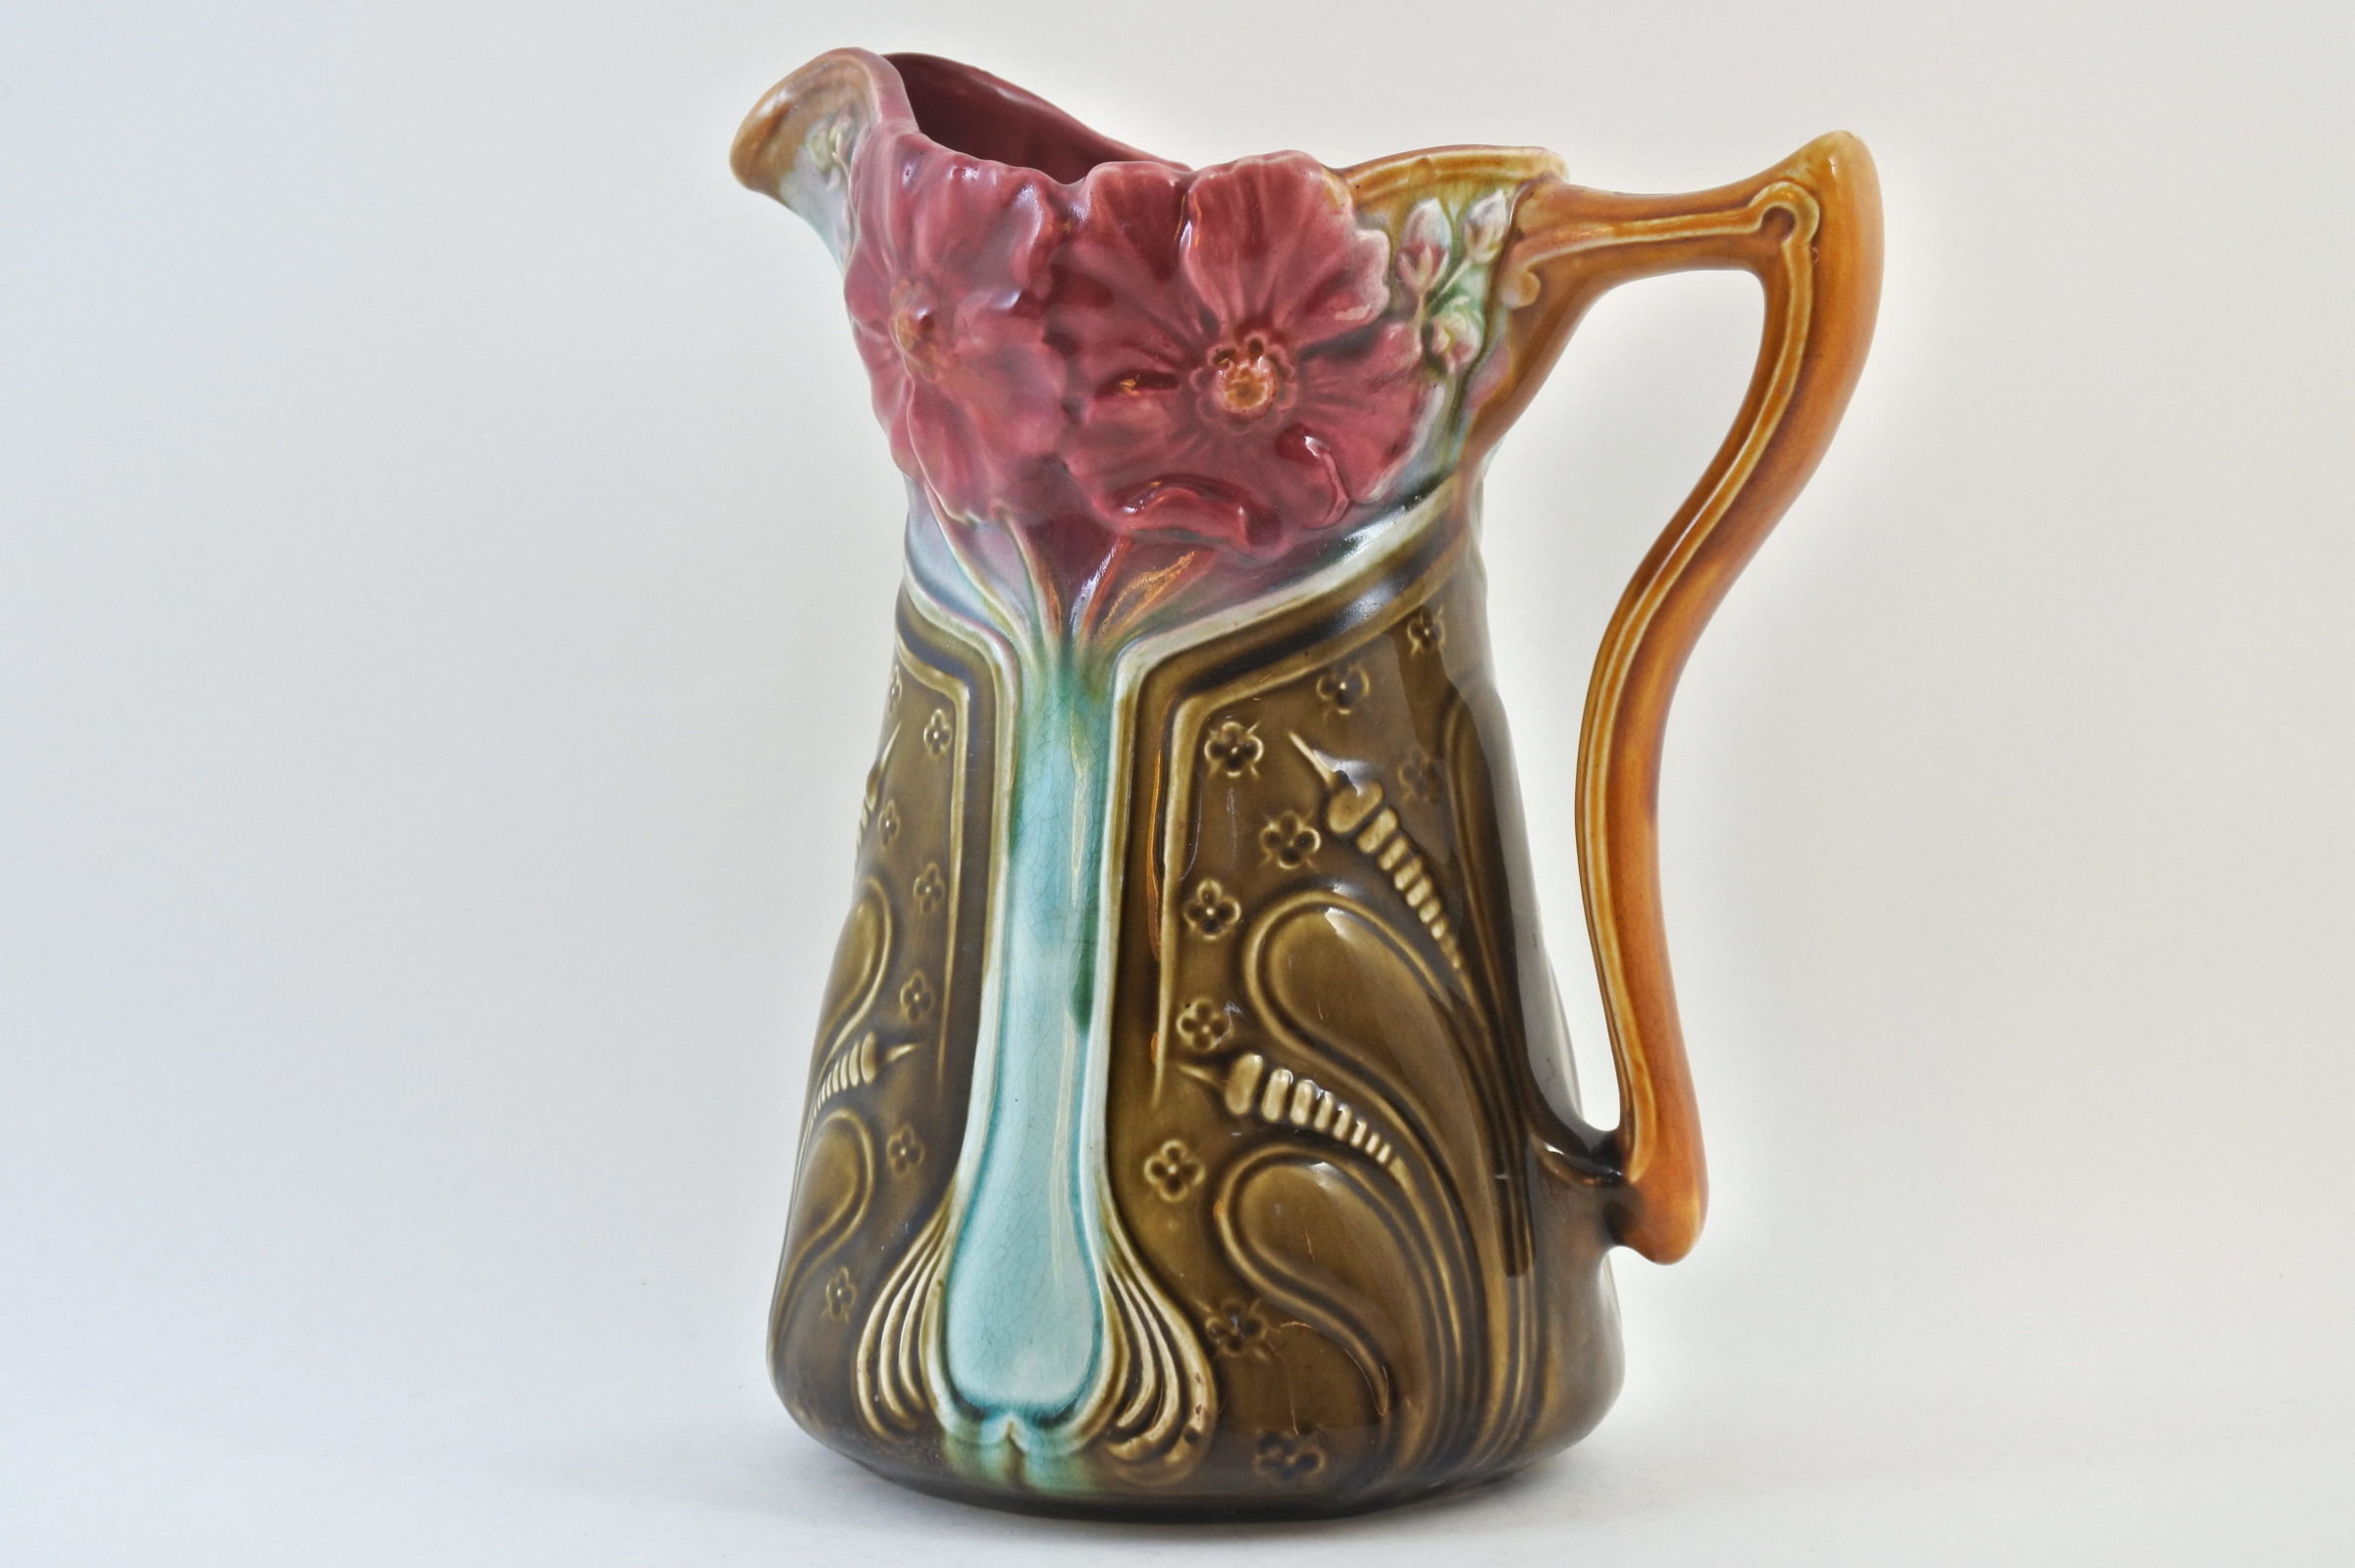 Brocca in ceramica barbotine con fiori - Onnaing n° 756 - 2